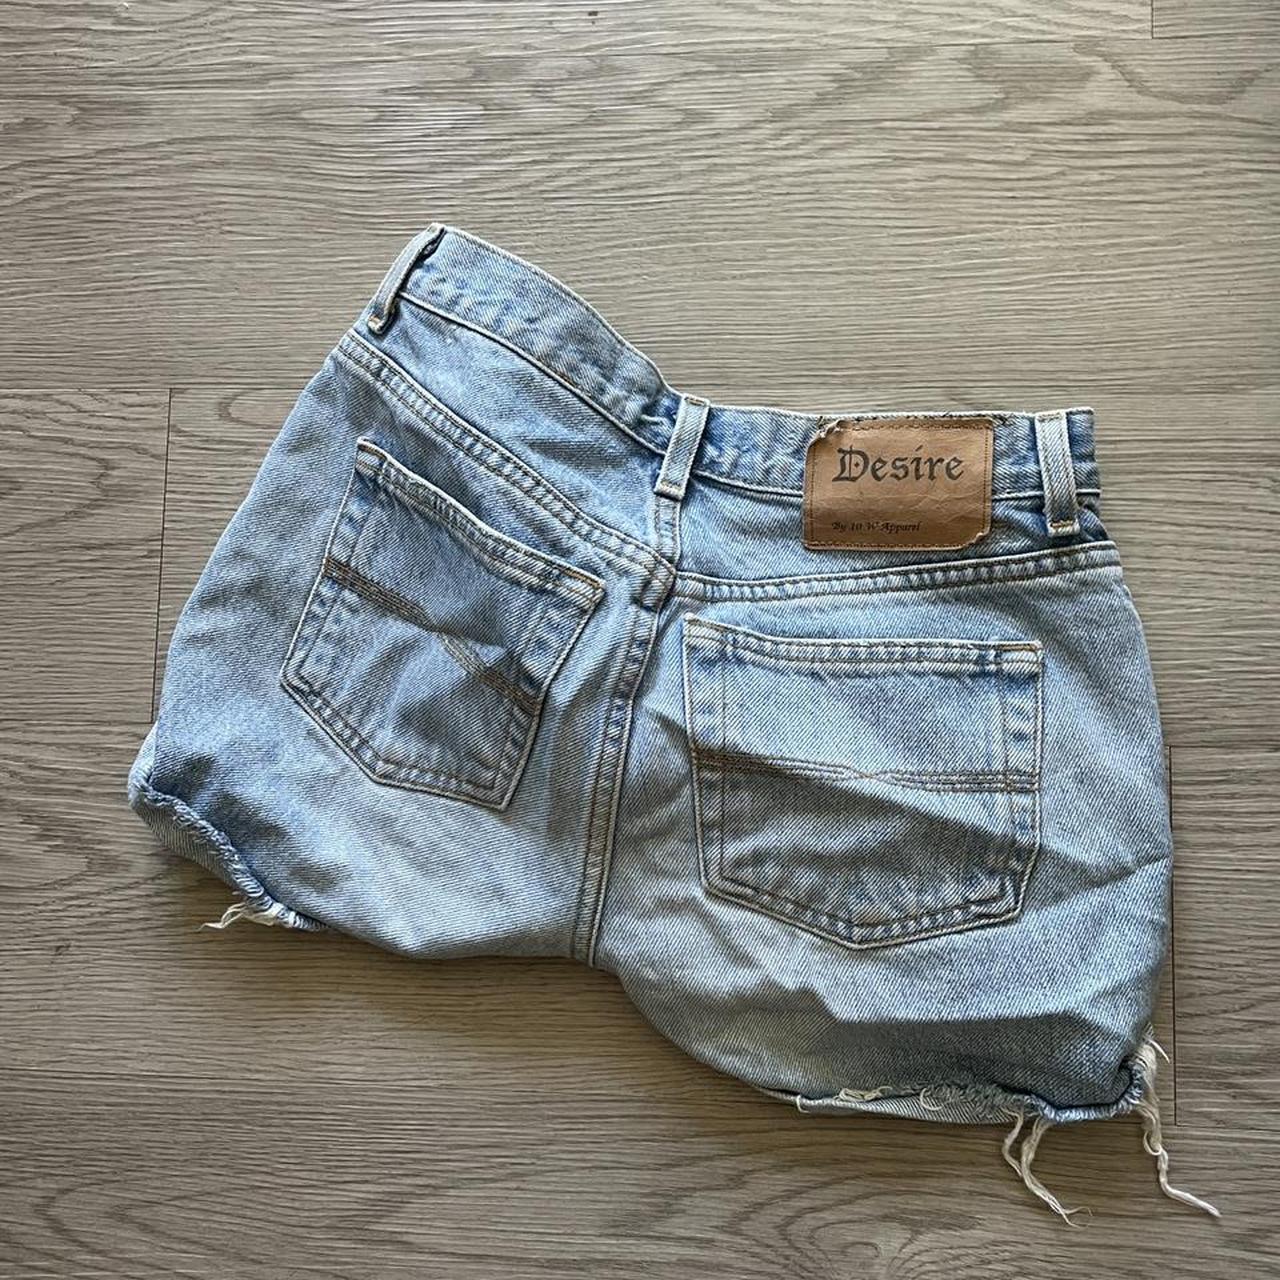 Product Image 2 - light wash jean shorts

size 24

#lightwash